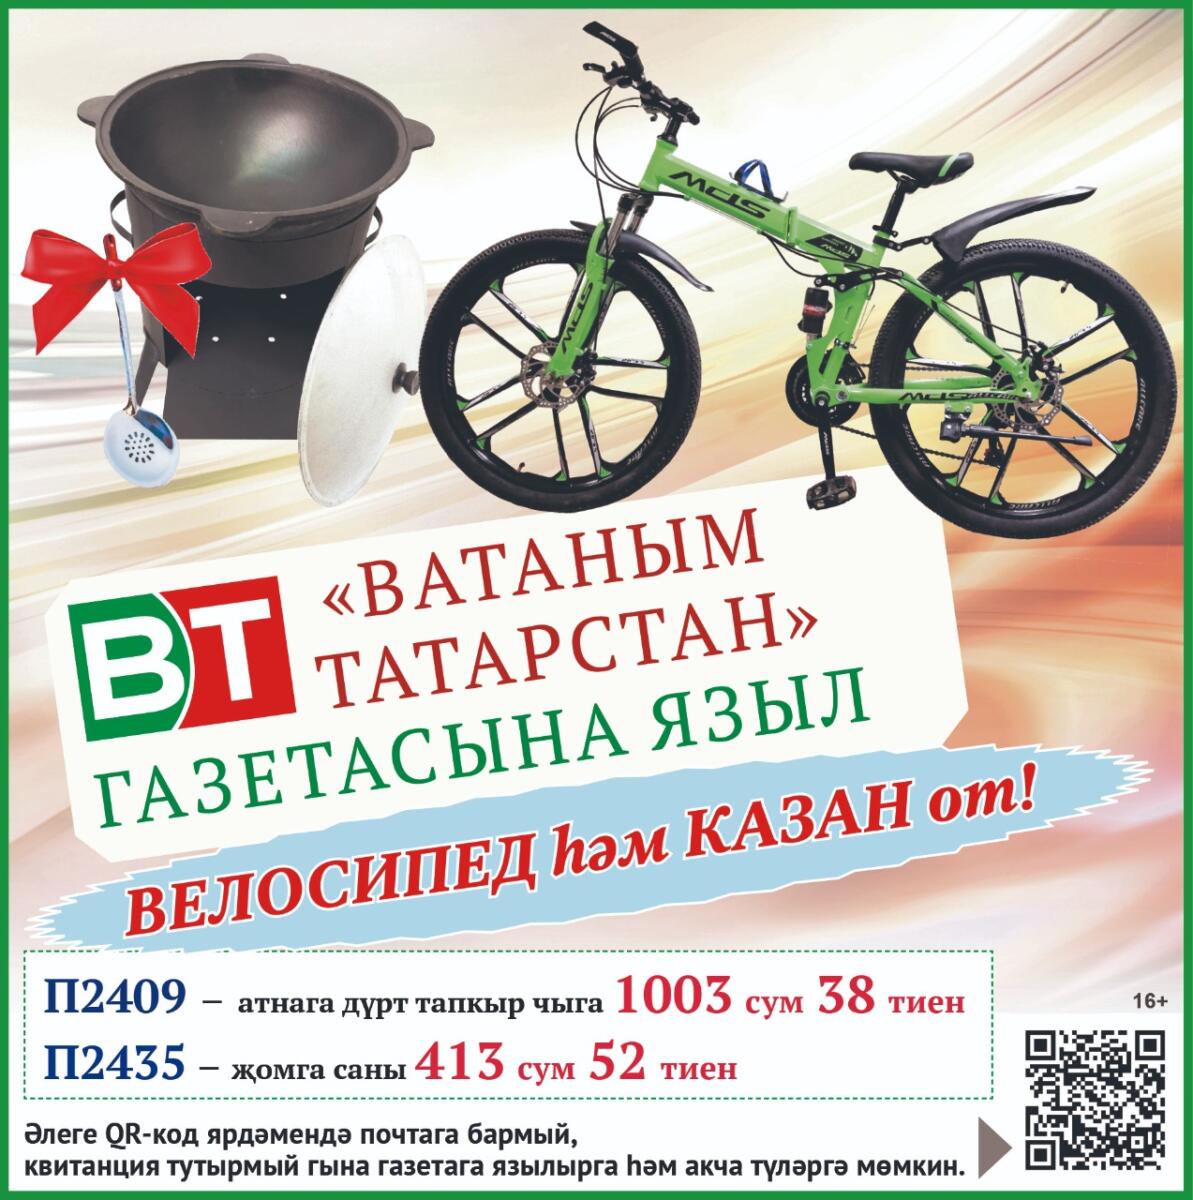 «Ватаным Татарстан»га языл һәм бик шәп казан белән велосипед от!